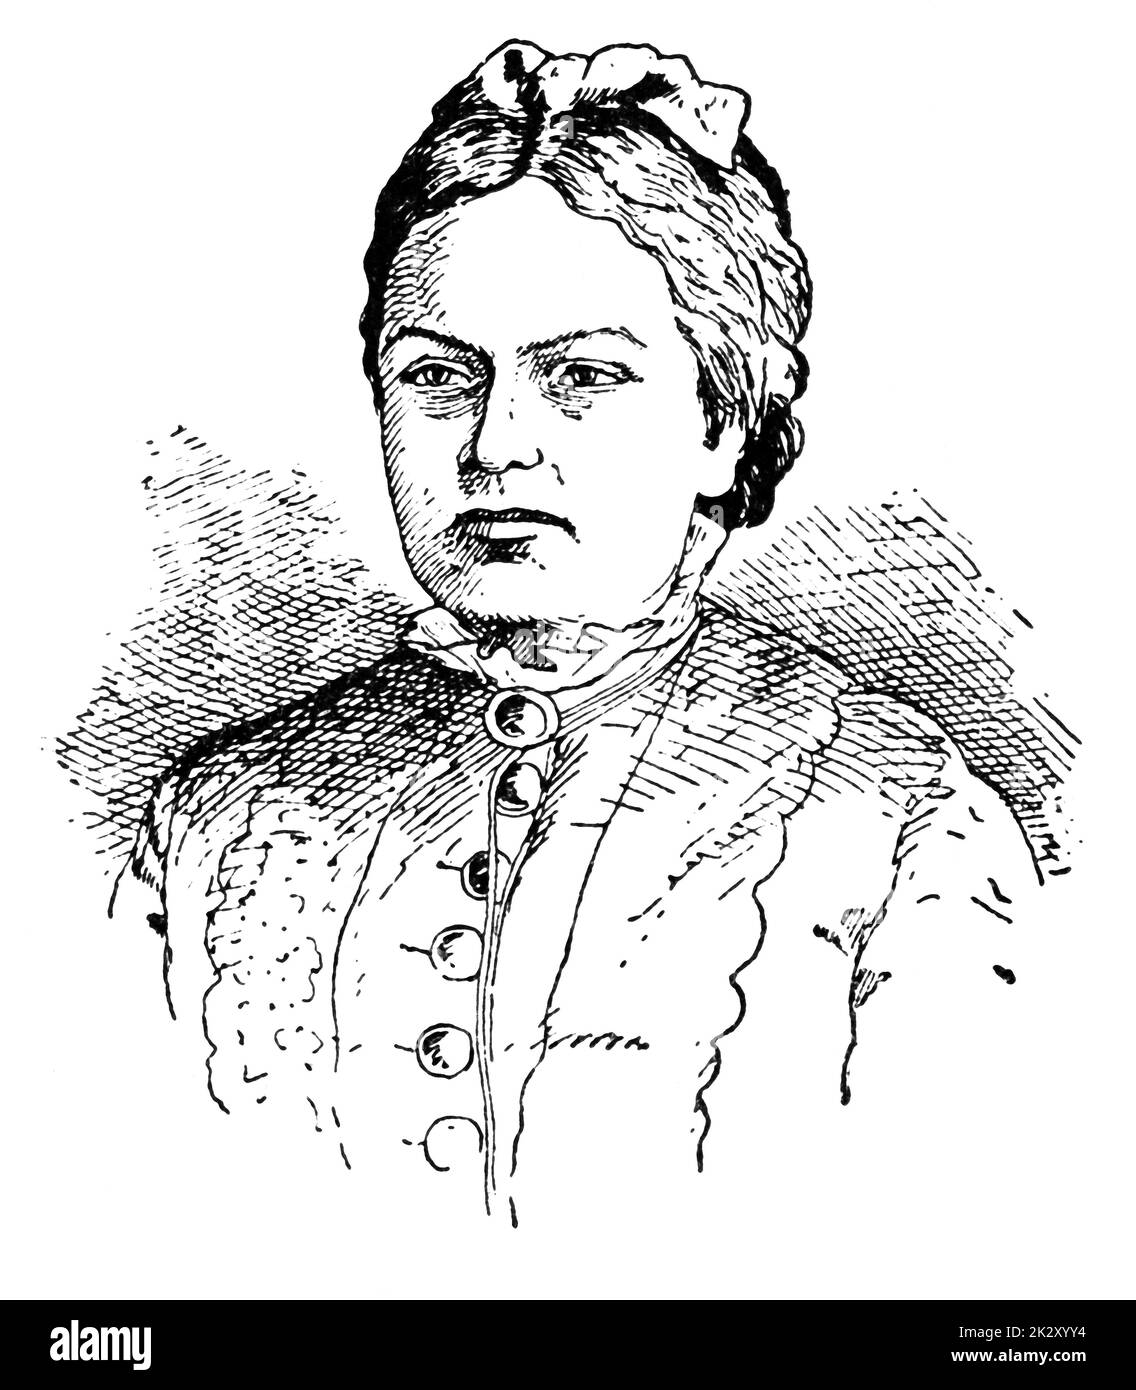 Portrait of Countess Marie von Ebner-Eschenbach - an Austrian writer. Illustration of the 19th century. White background. Stock Photo